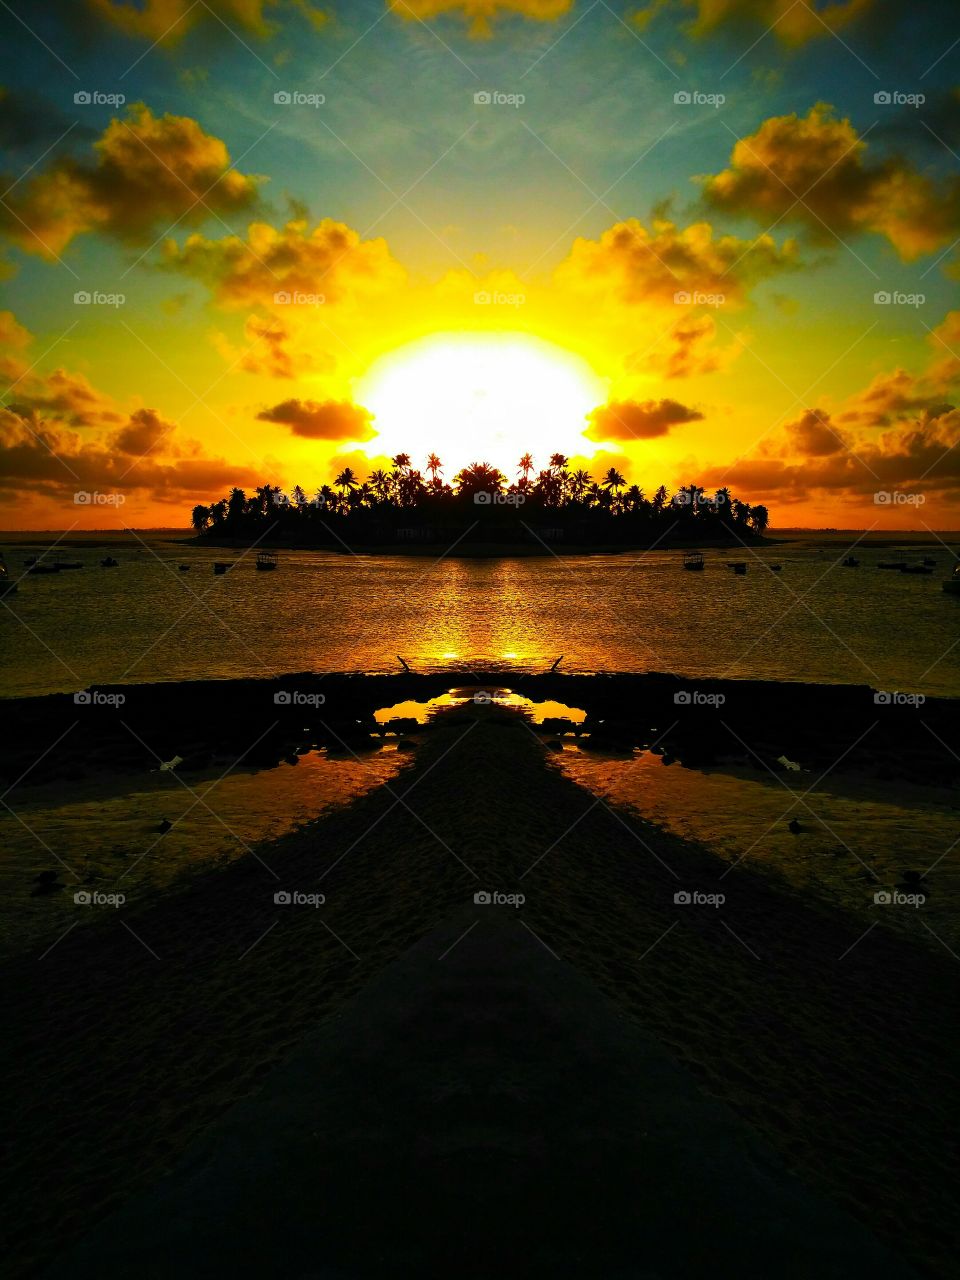 mirror sunset from Brazil